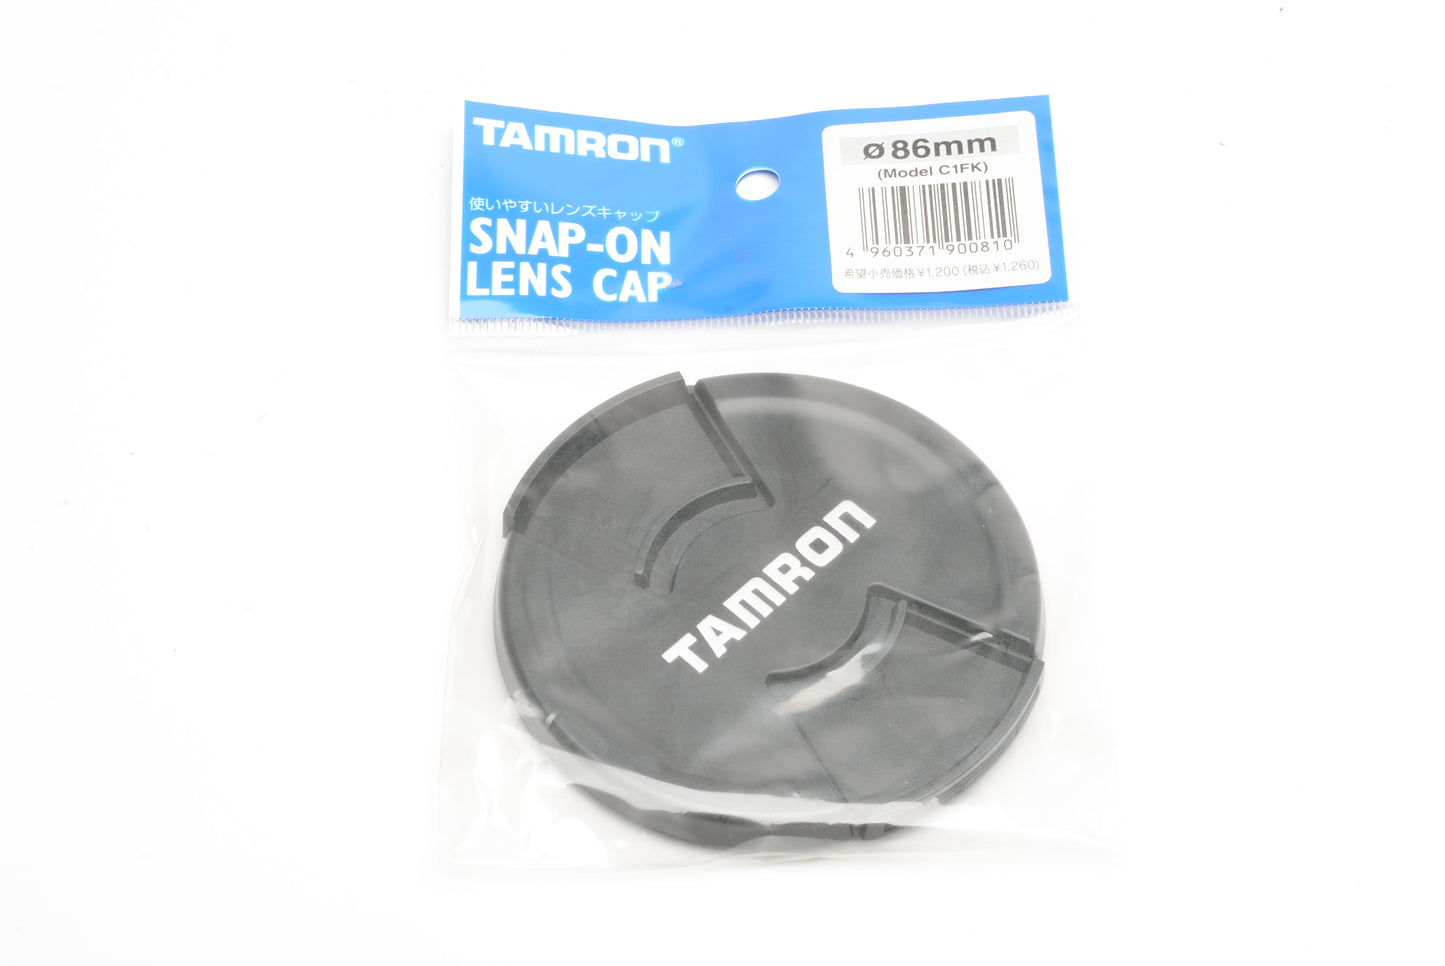 Tamron 86mm Snap-on len scap (Genuine) C1-FK